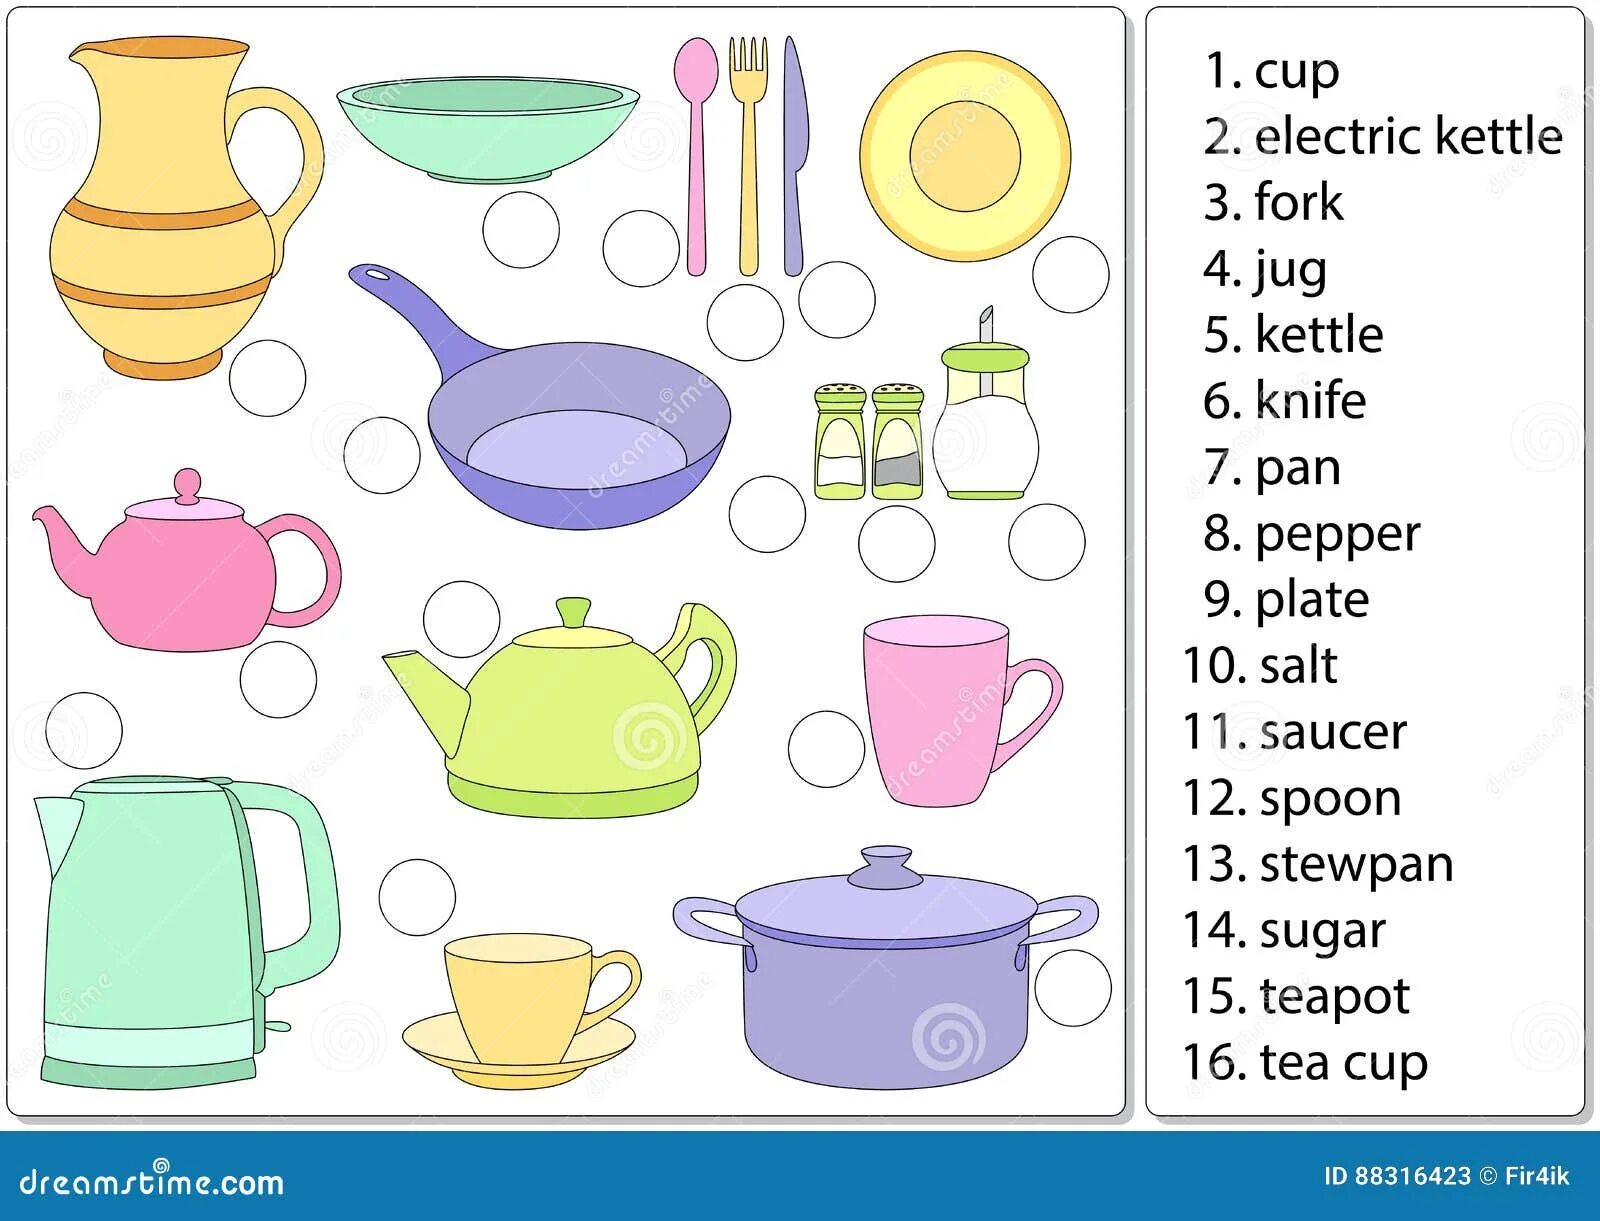 Посуда Worksheets for Kids. Посуда по англ. Tableware for Kids. Tableware for Kids in Worksheets.